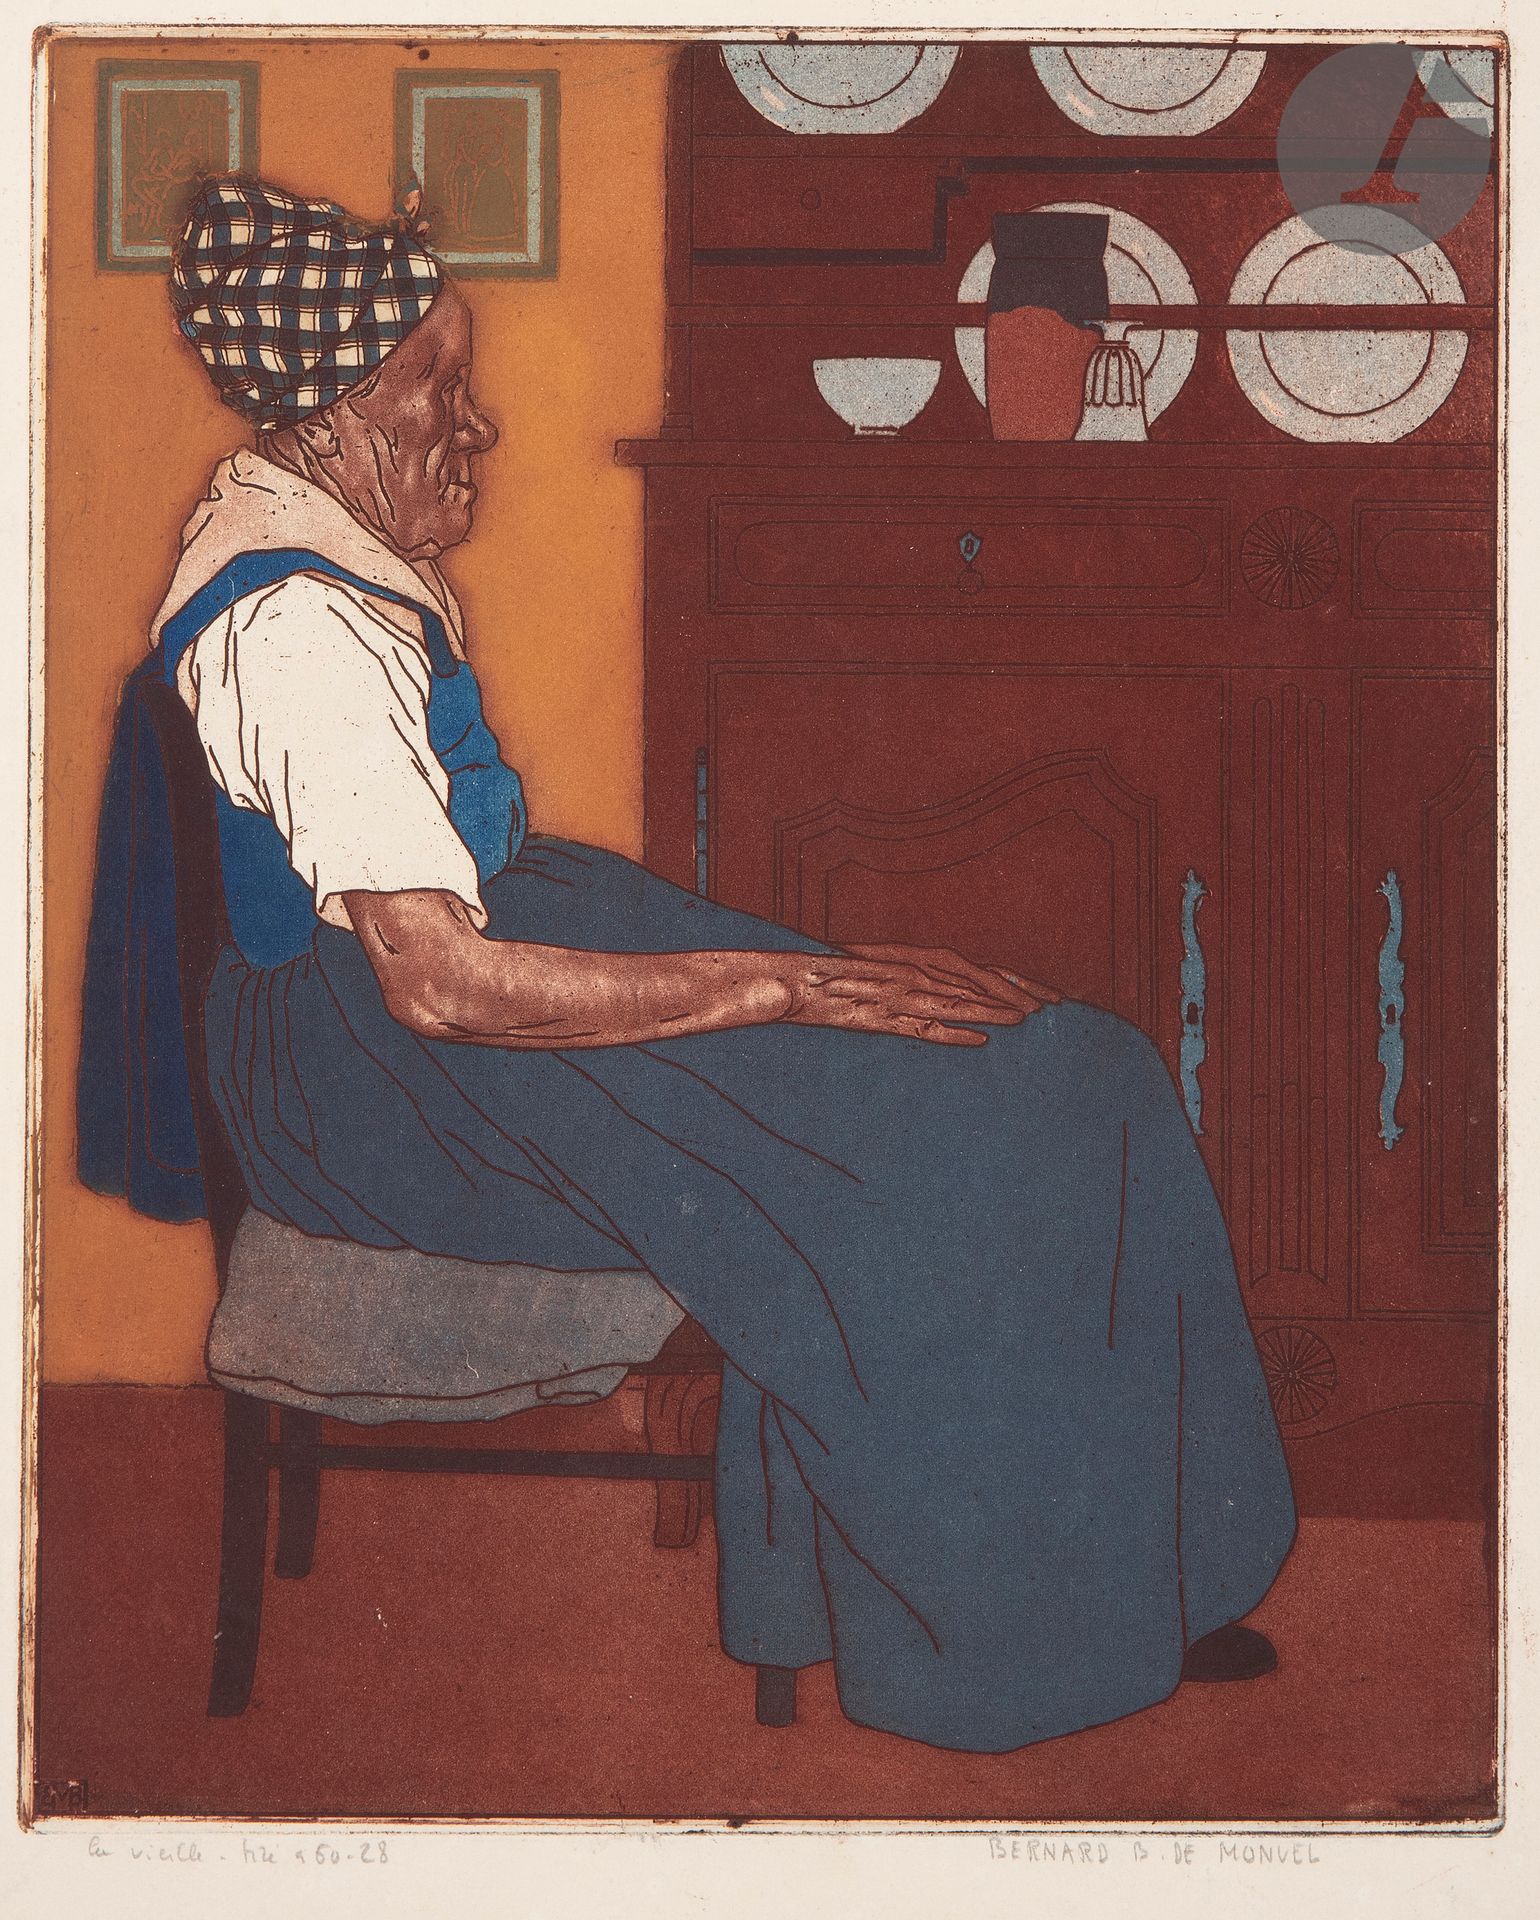 Null 伯纳德-布泰-德-蒙维尔(1881-1949)

老女人》。大约1900年。蚀刻和水印。255 x 310毫米。以彩色印刷。非常好的牛皮纸样张，有标题&hellip;